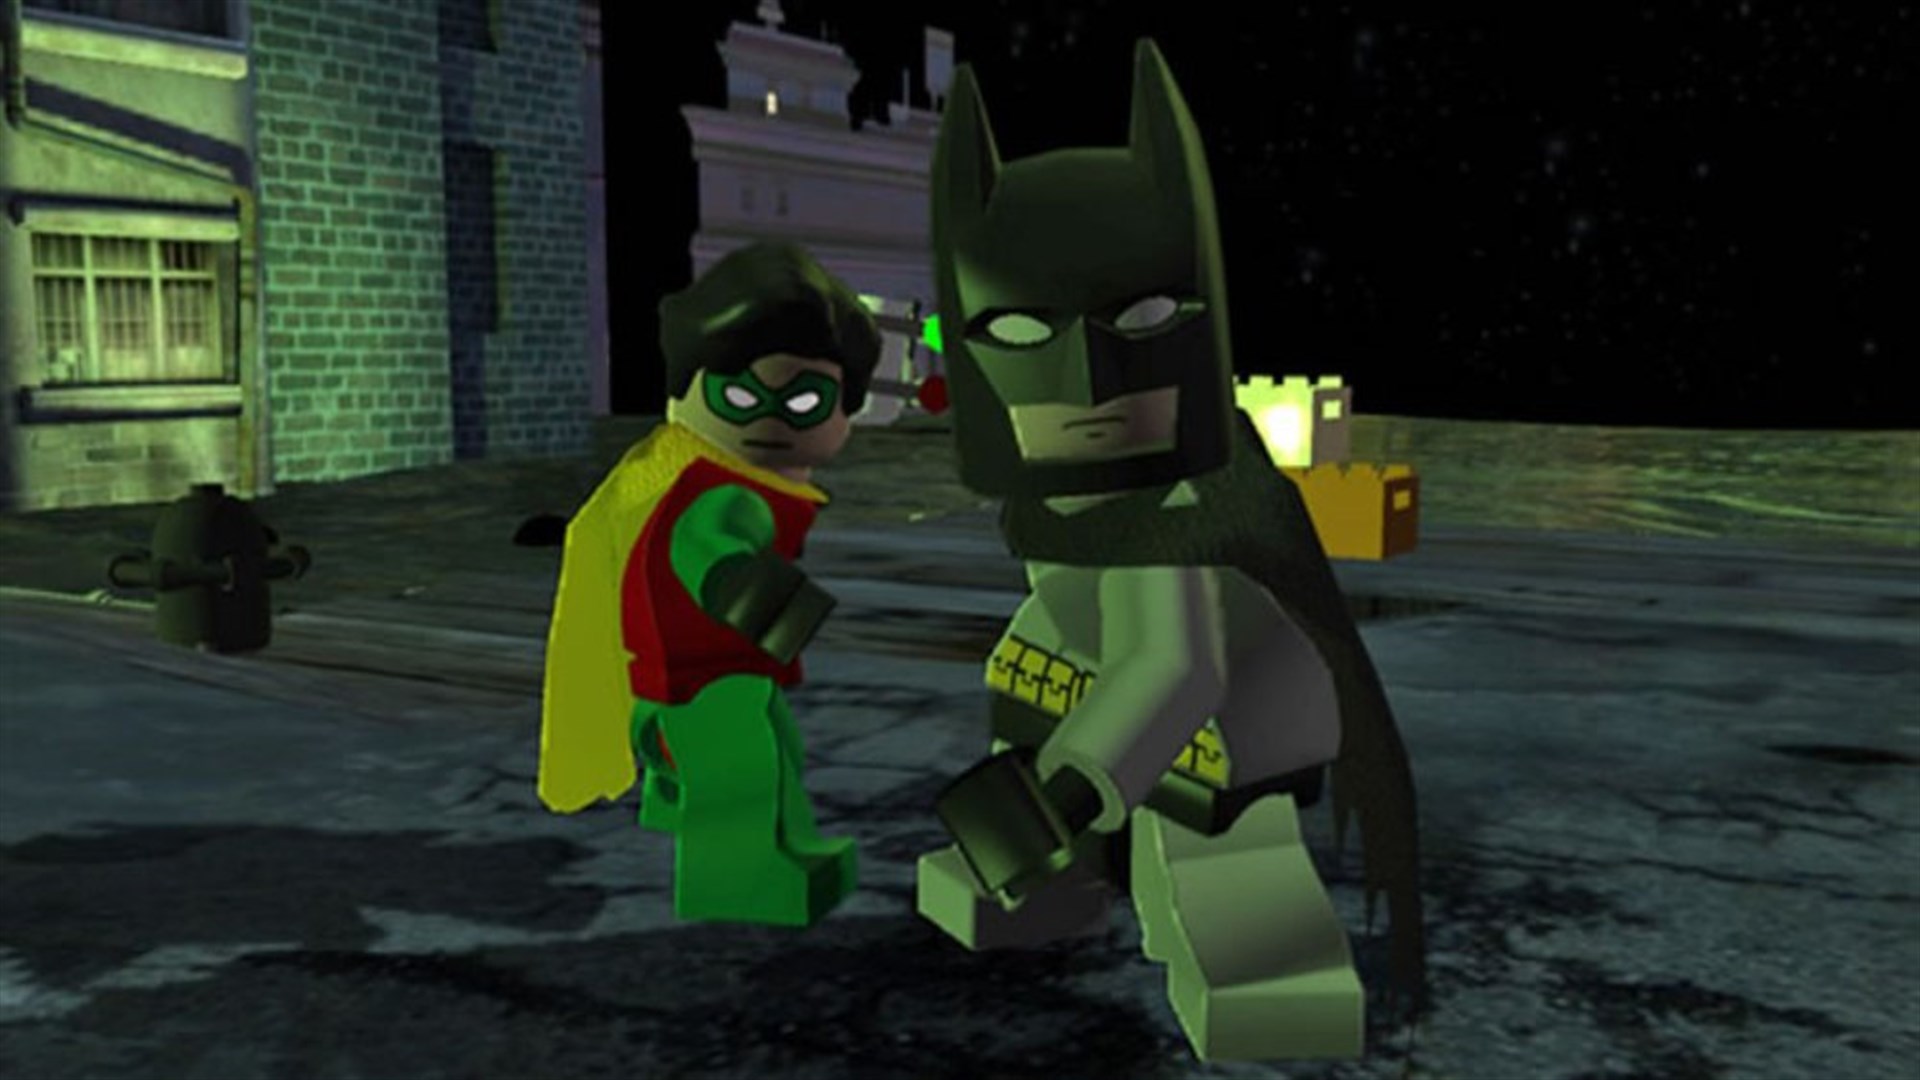 LEGO Batman Review (Wii)